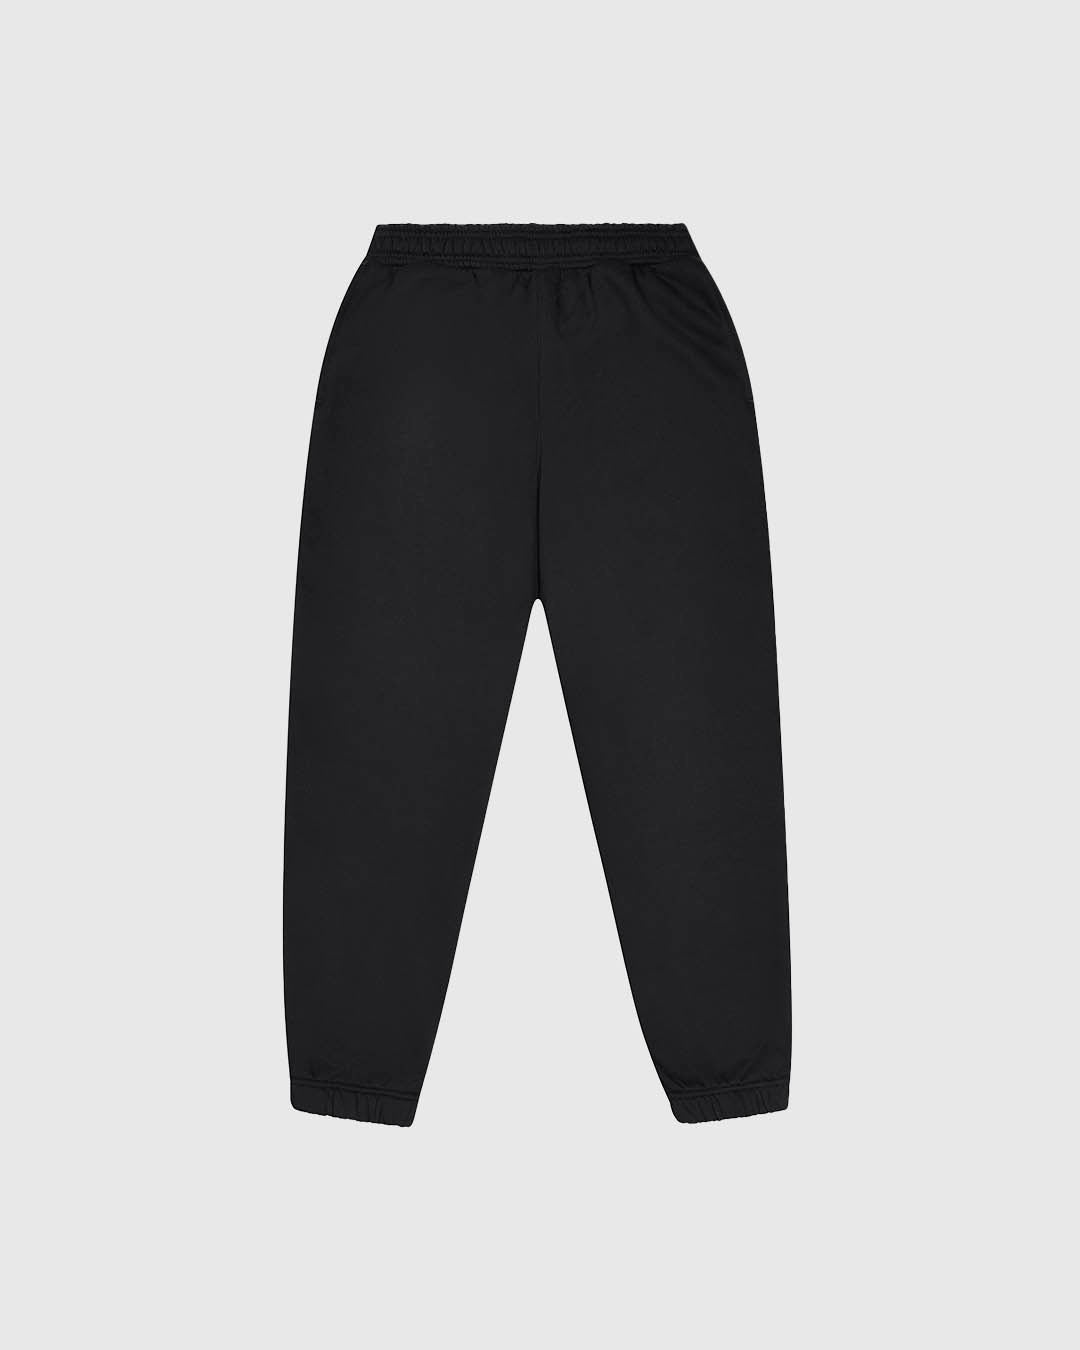 PFC: 003-3 - Men's Sweatpants - Onyx Black